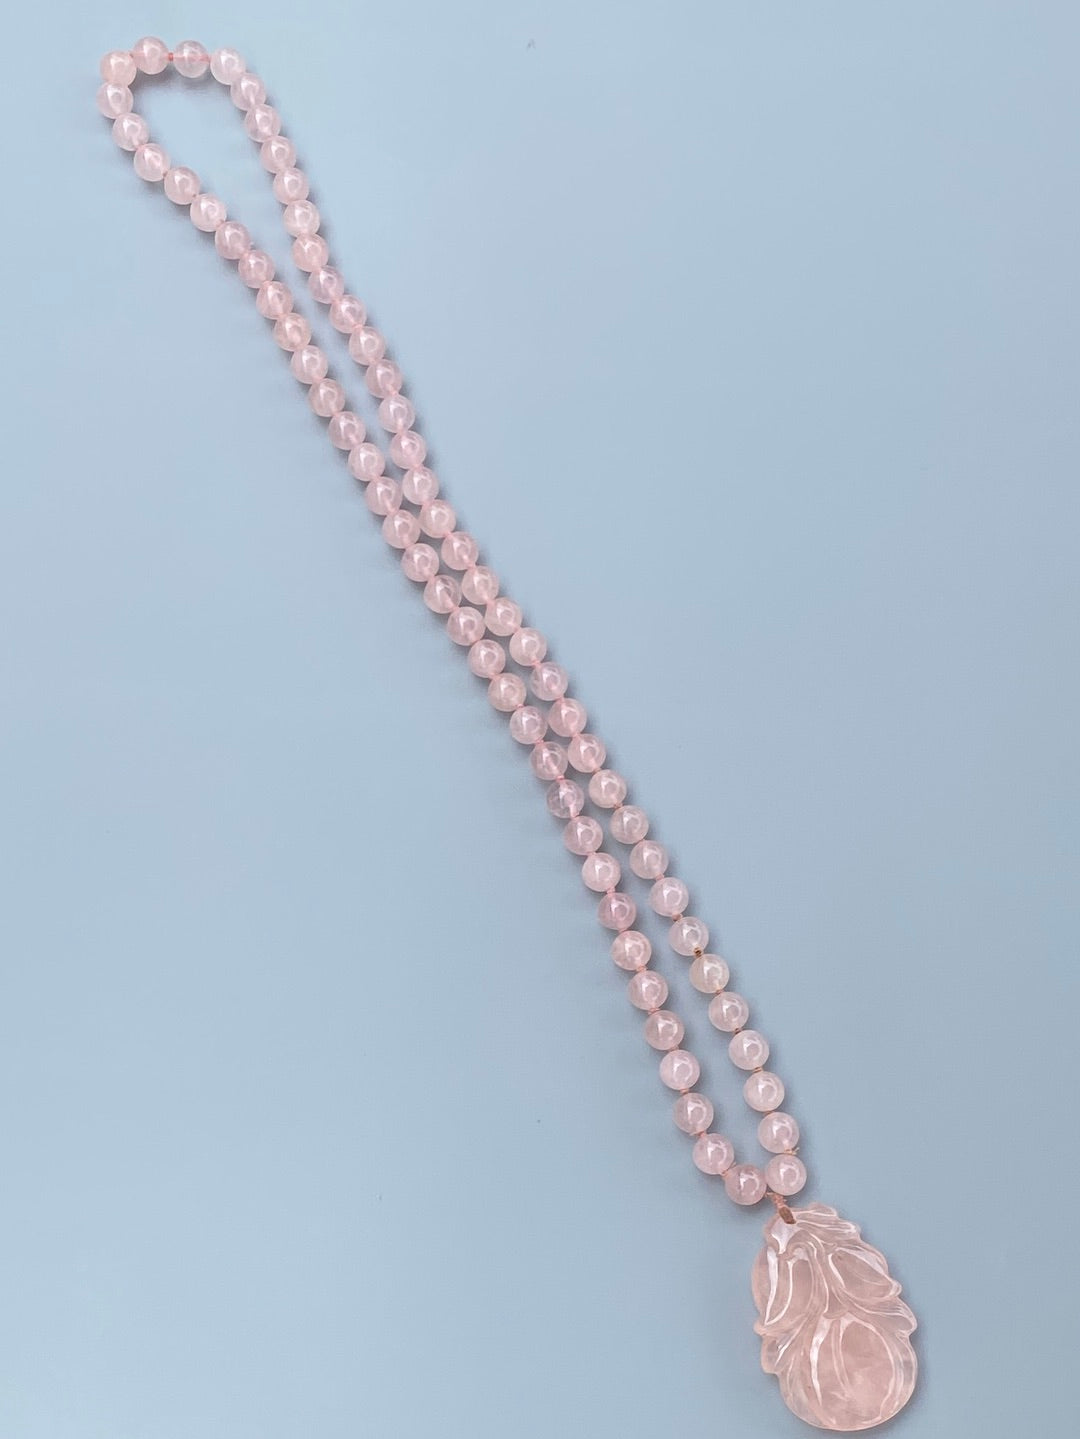 28" Pink Transparent Quartz Beads and Pendant